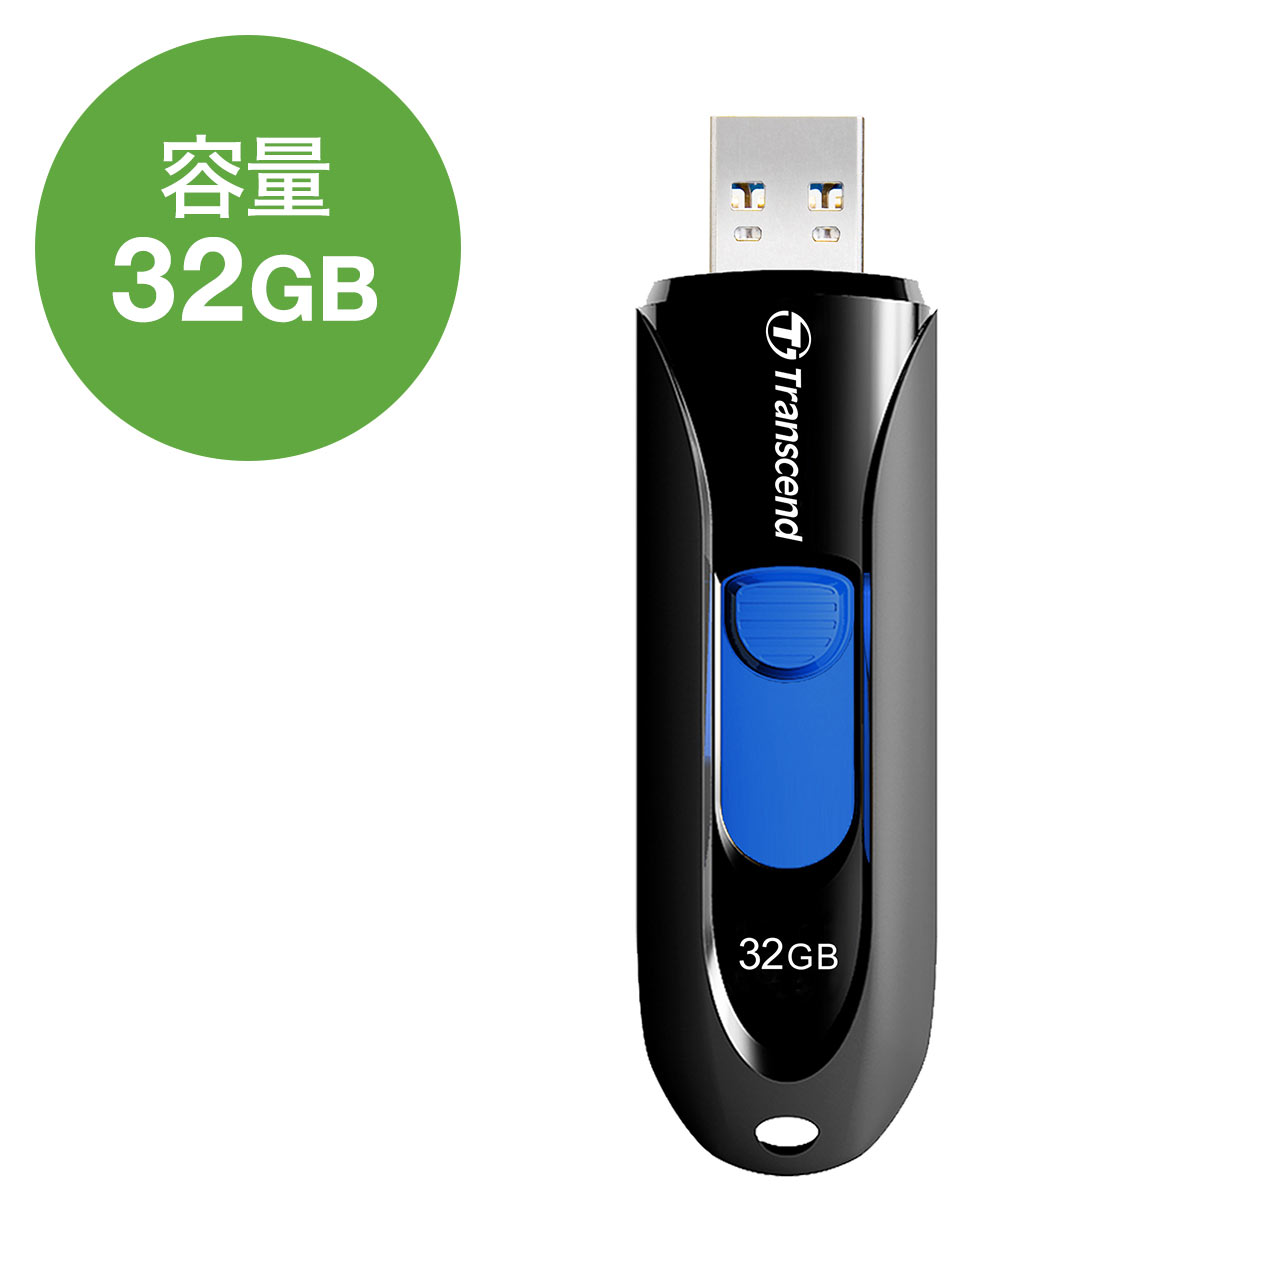 Transcend USBメモリ 32GB USB3.1(Gen1) キャップレス スライド式